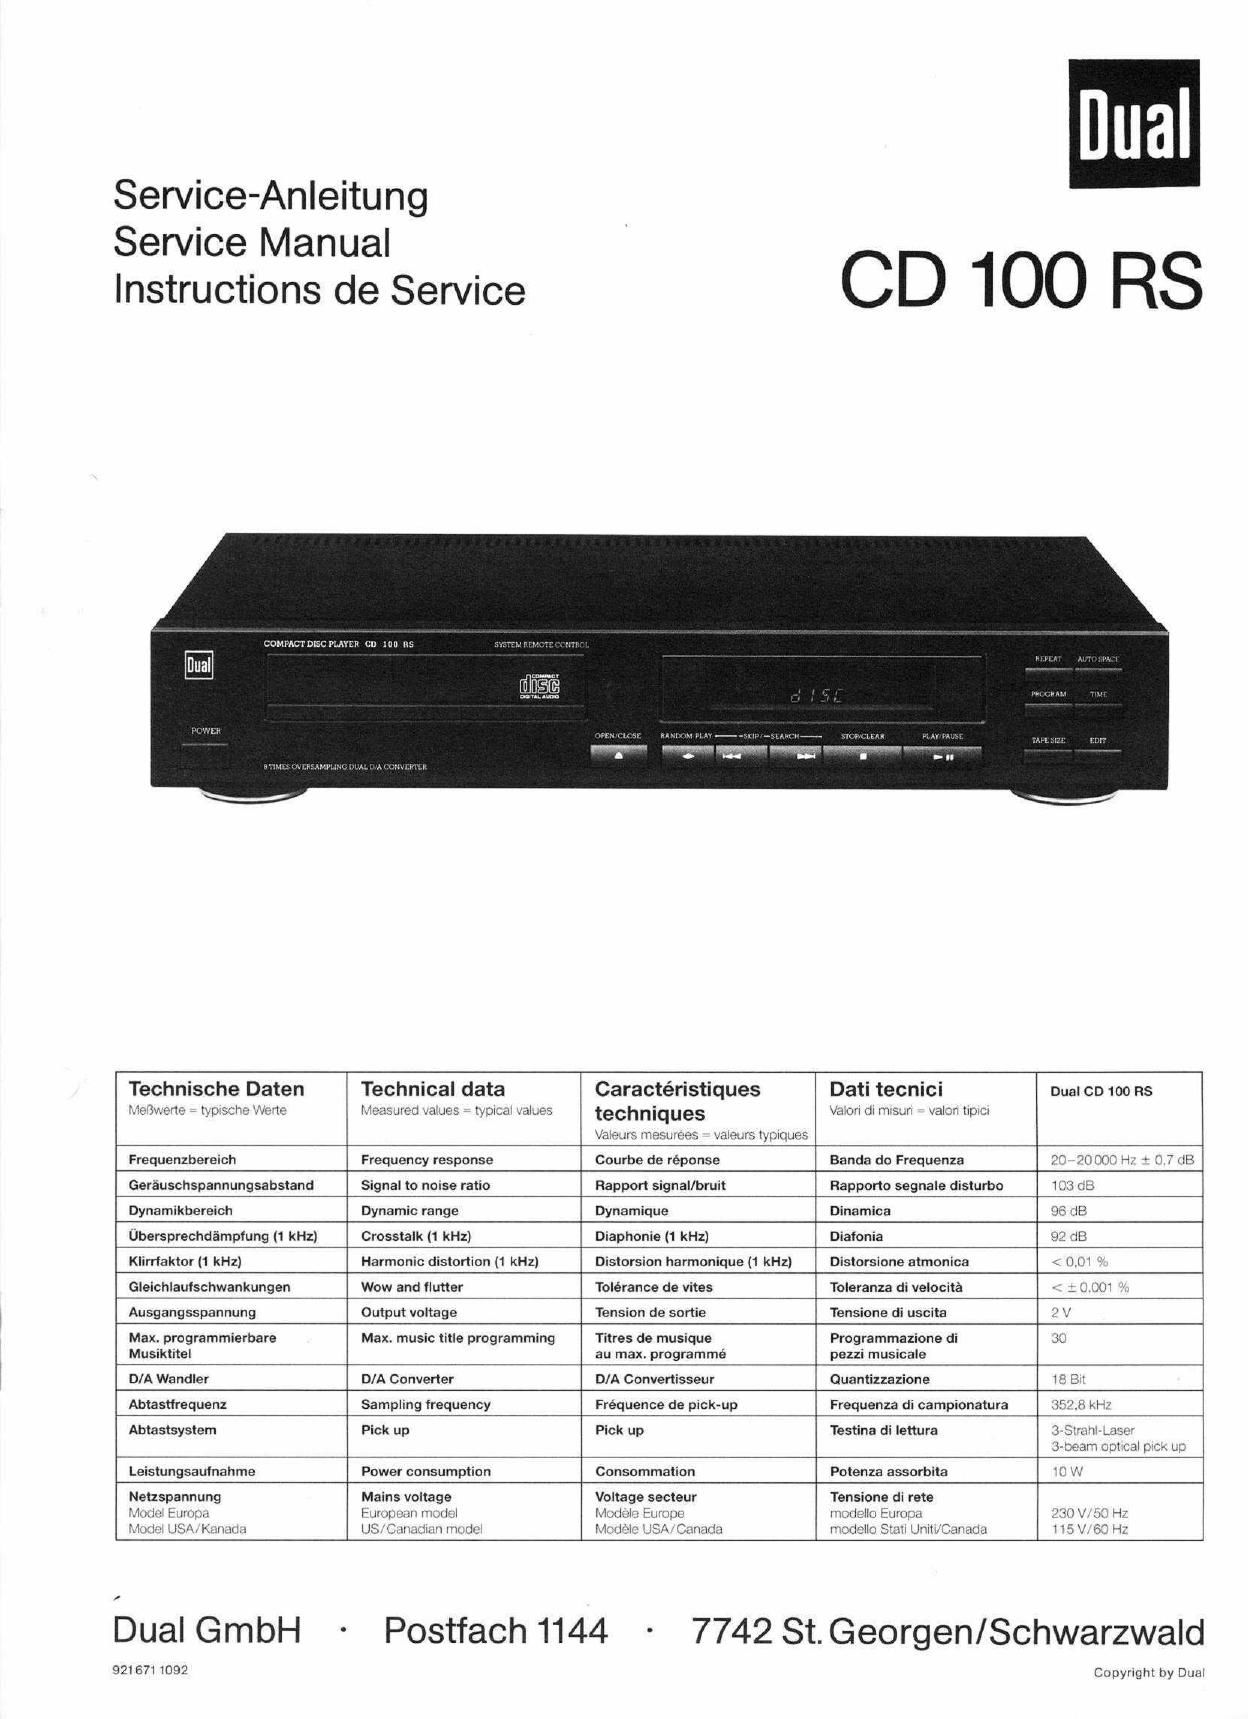 Dual CD 100 RS Service Manual